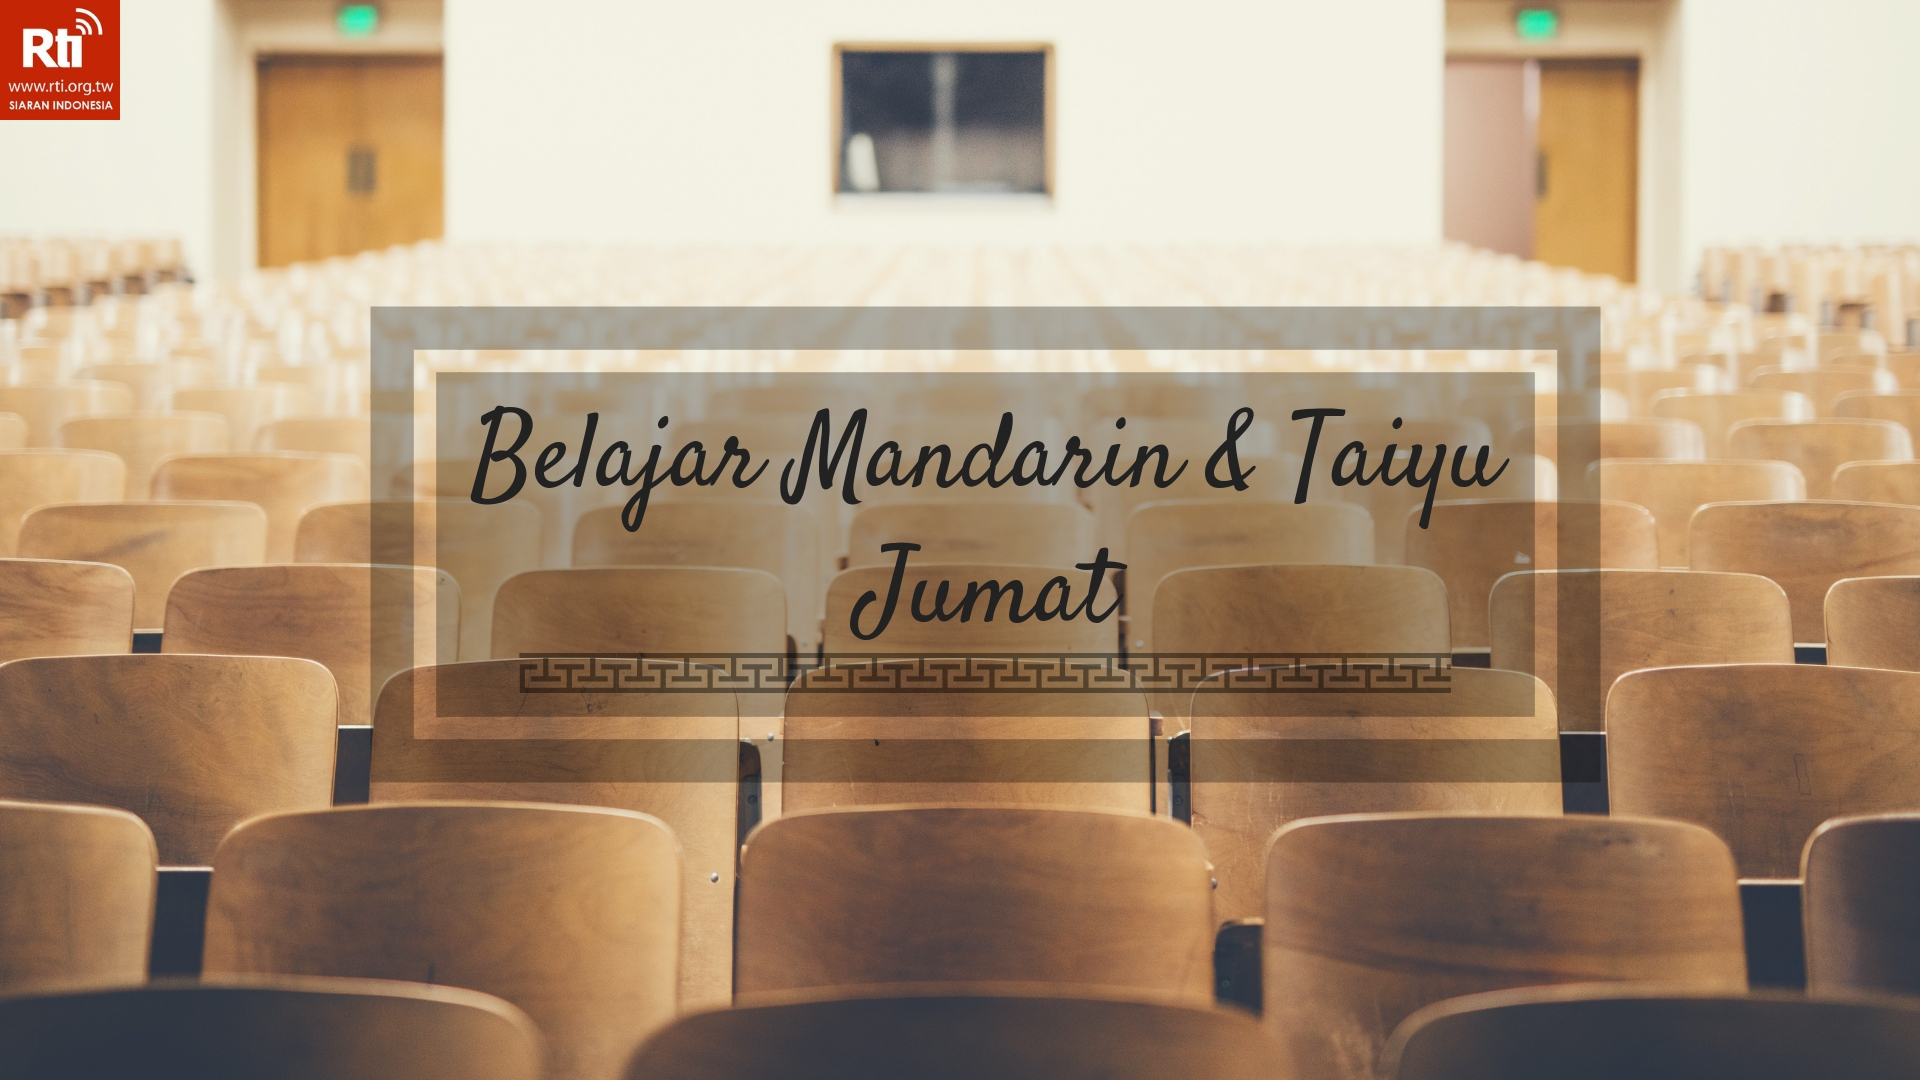 Belajar Mandarin, Taiyu & Bahasa  Indonesia : 損失慘重 Rugi Besar